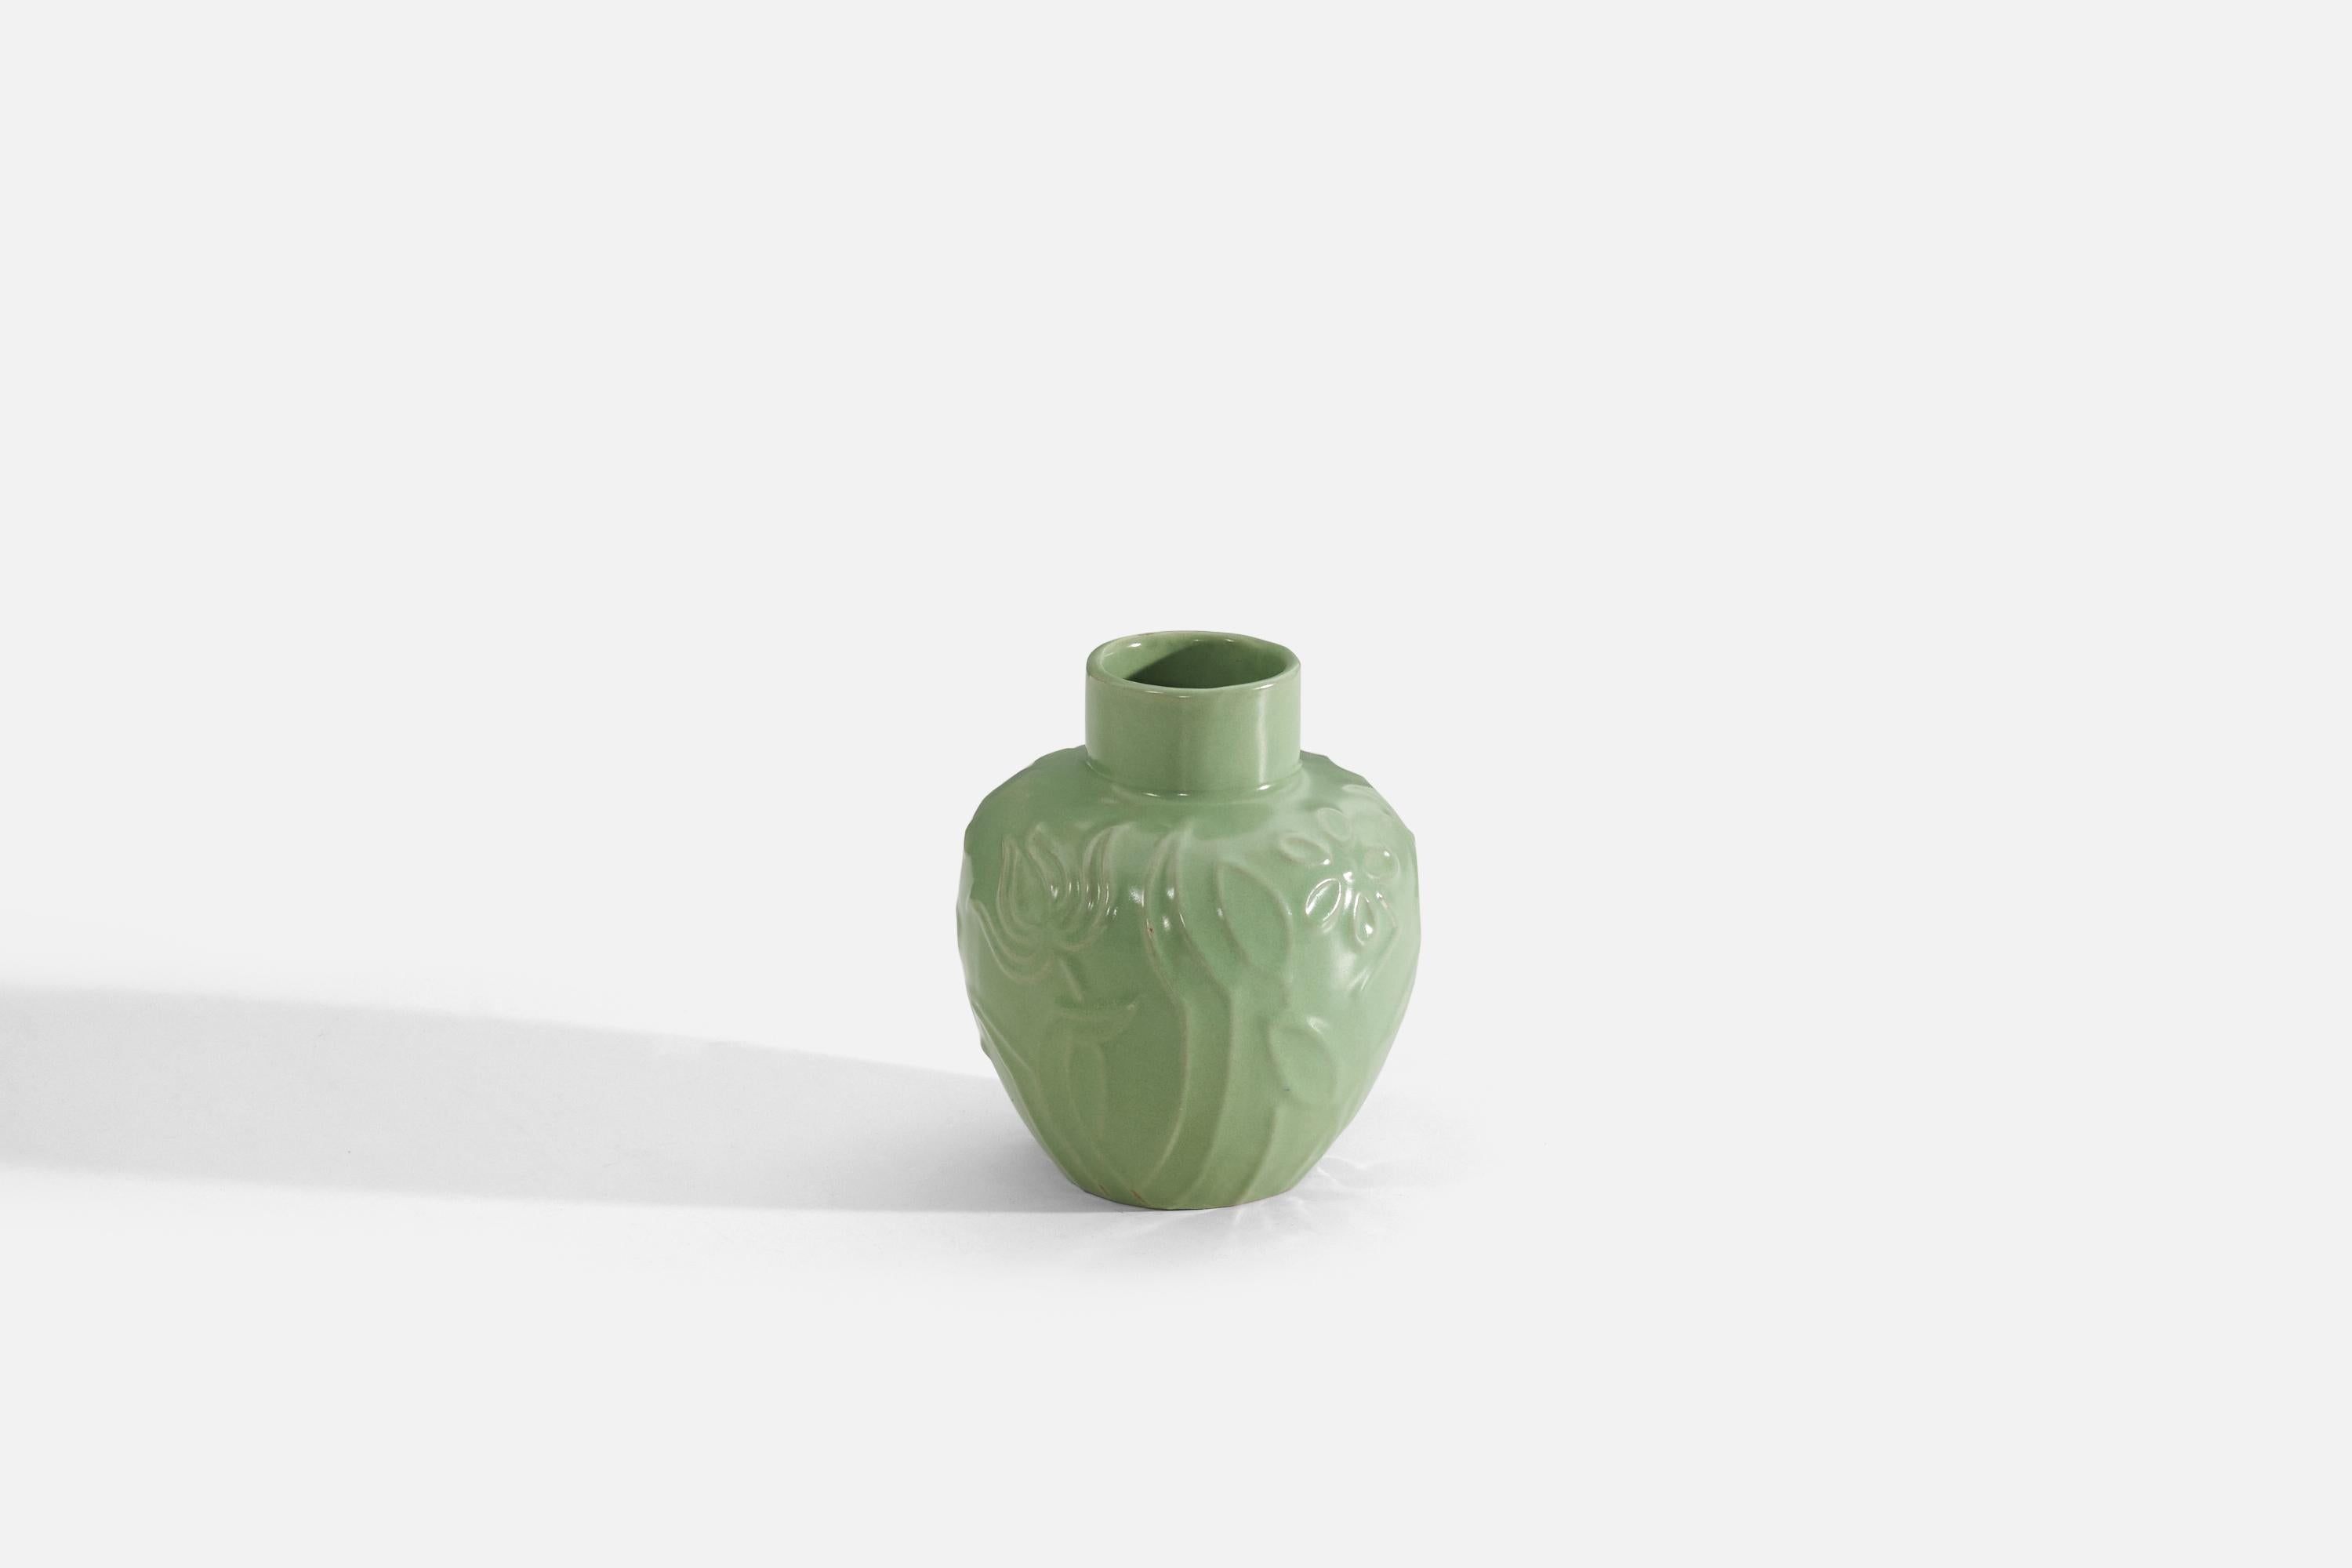 A green-glazed earthenware vase with floral motif produced by Upsala-Ekeby, Sweden, c. 1930s-1940s. Designed by Harald Östergren (1888-1974).

